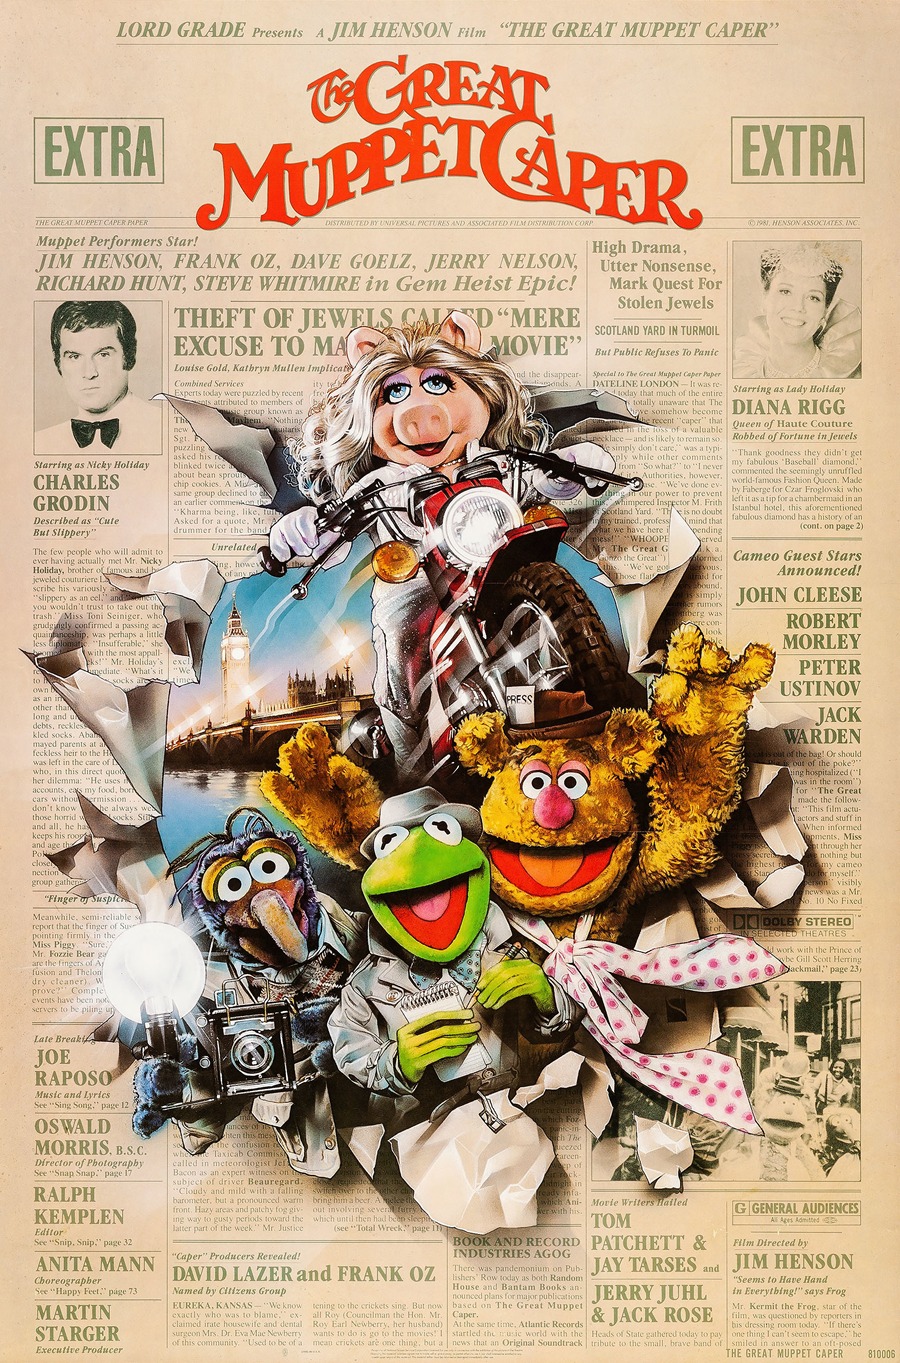 Drew Struzan - The Great Muppet Caper